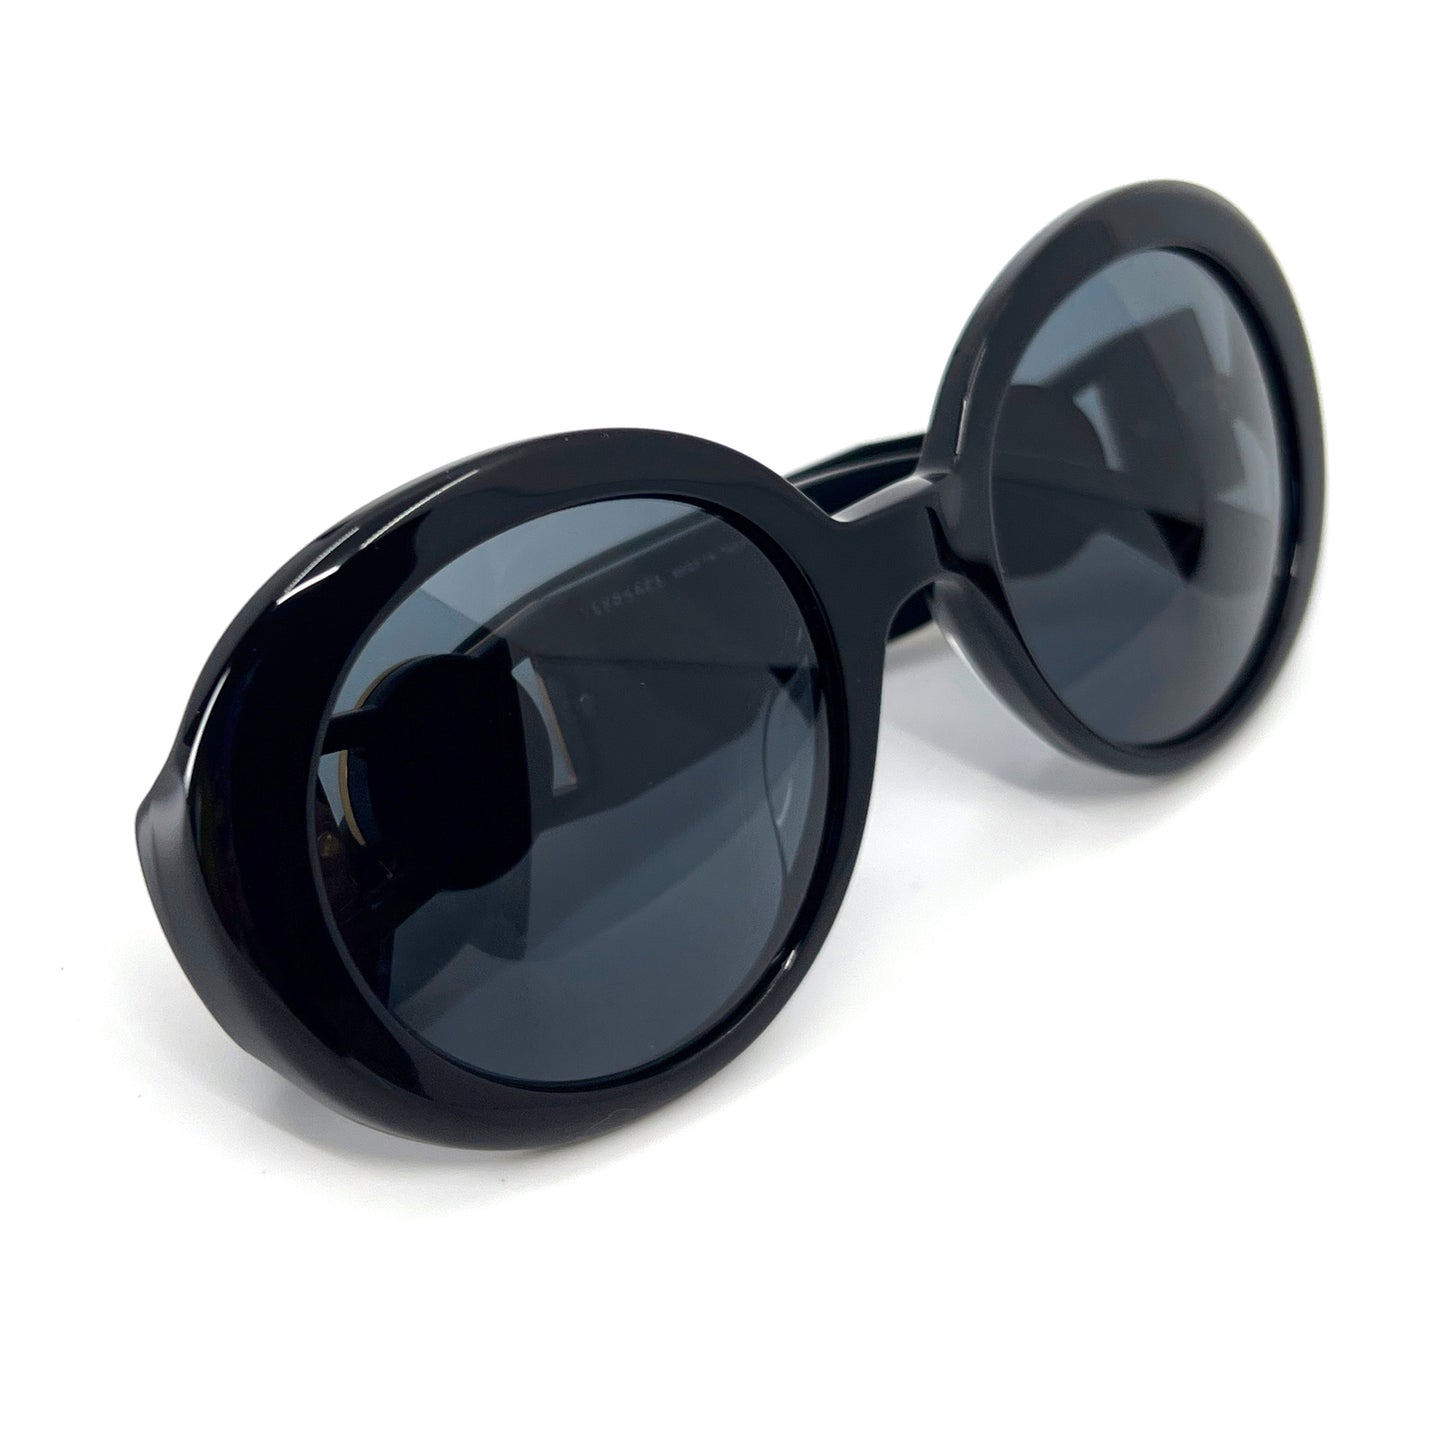 VERSACE Sunglasses MOD.4414-F GB1/87